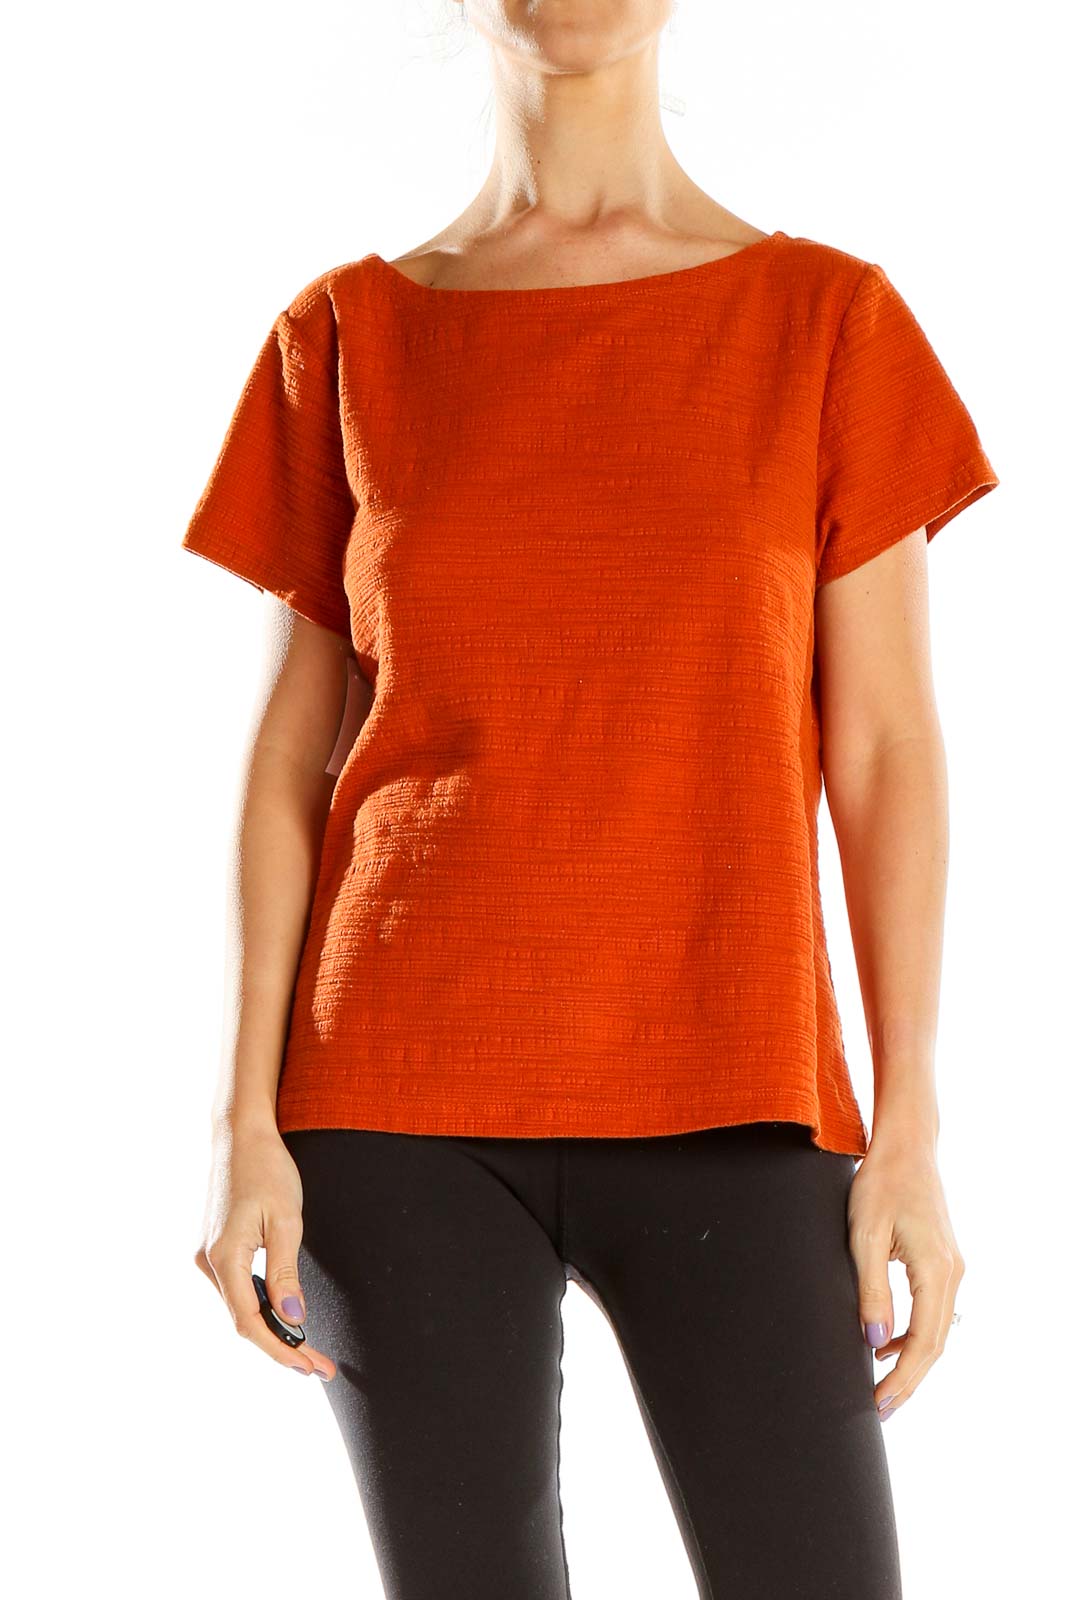 Orange Textured All Day Wear T-Shirt Front